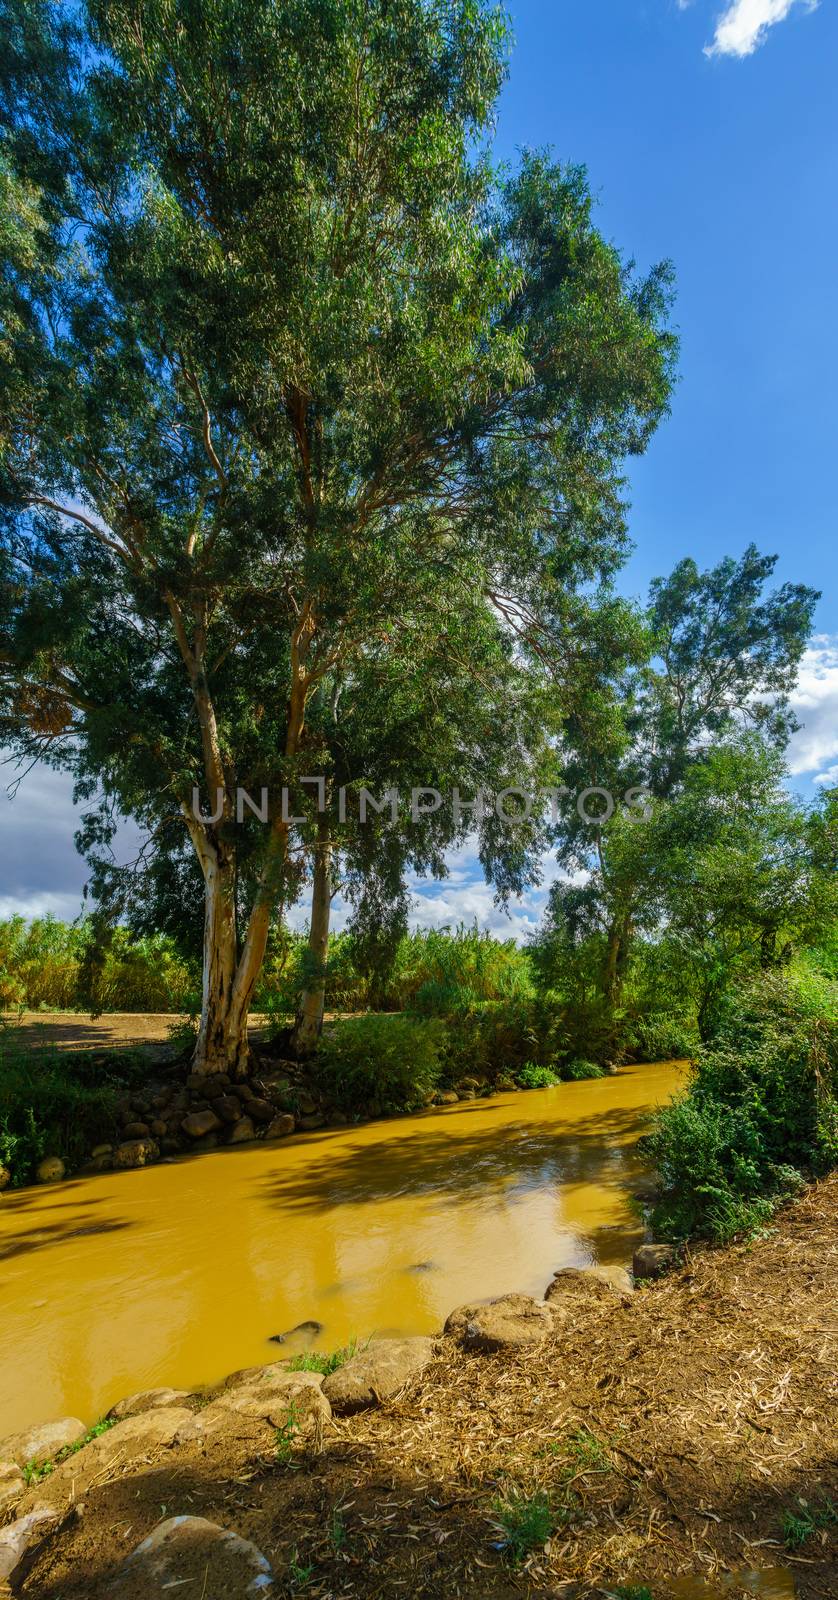 Jordan River with Eucalyptus trees by RnDmS